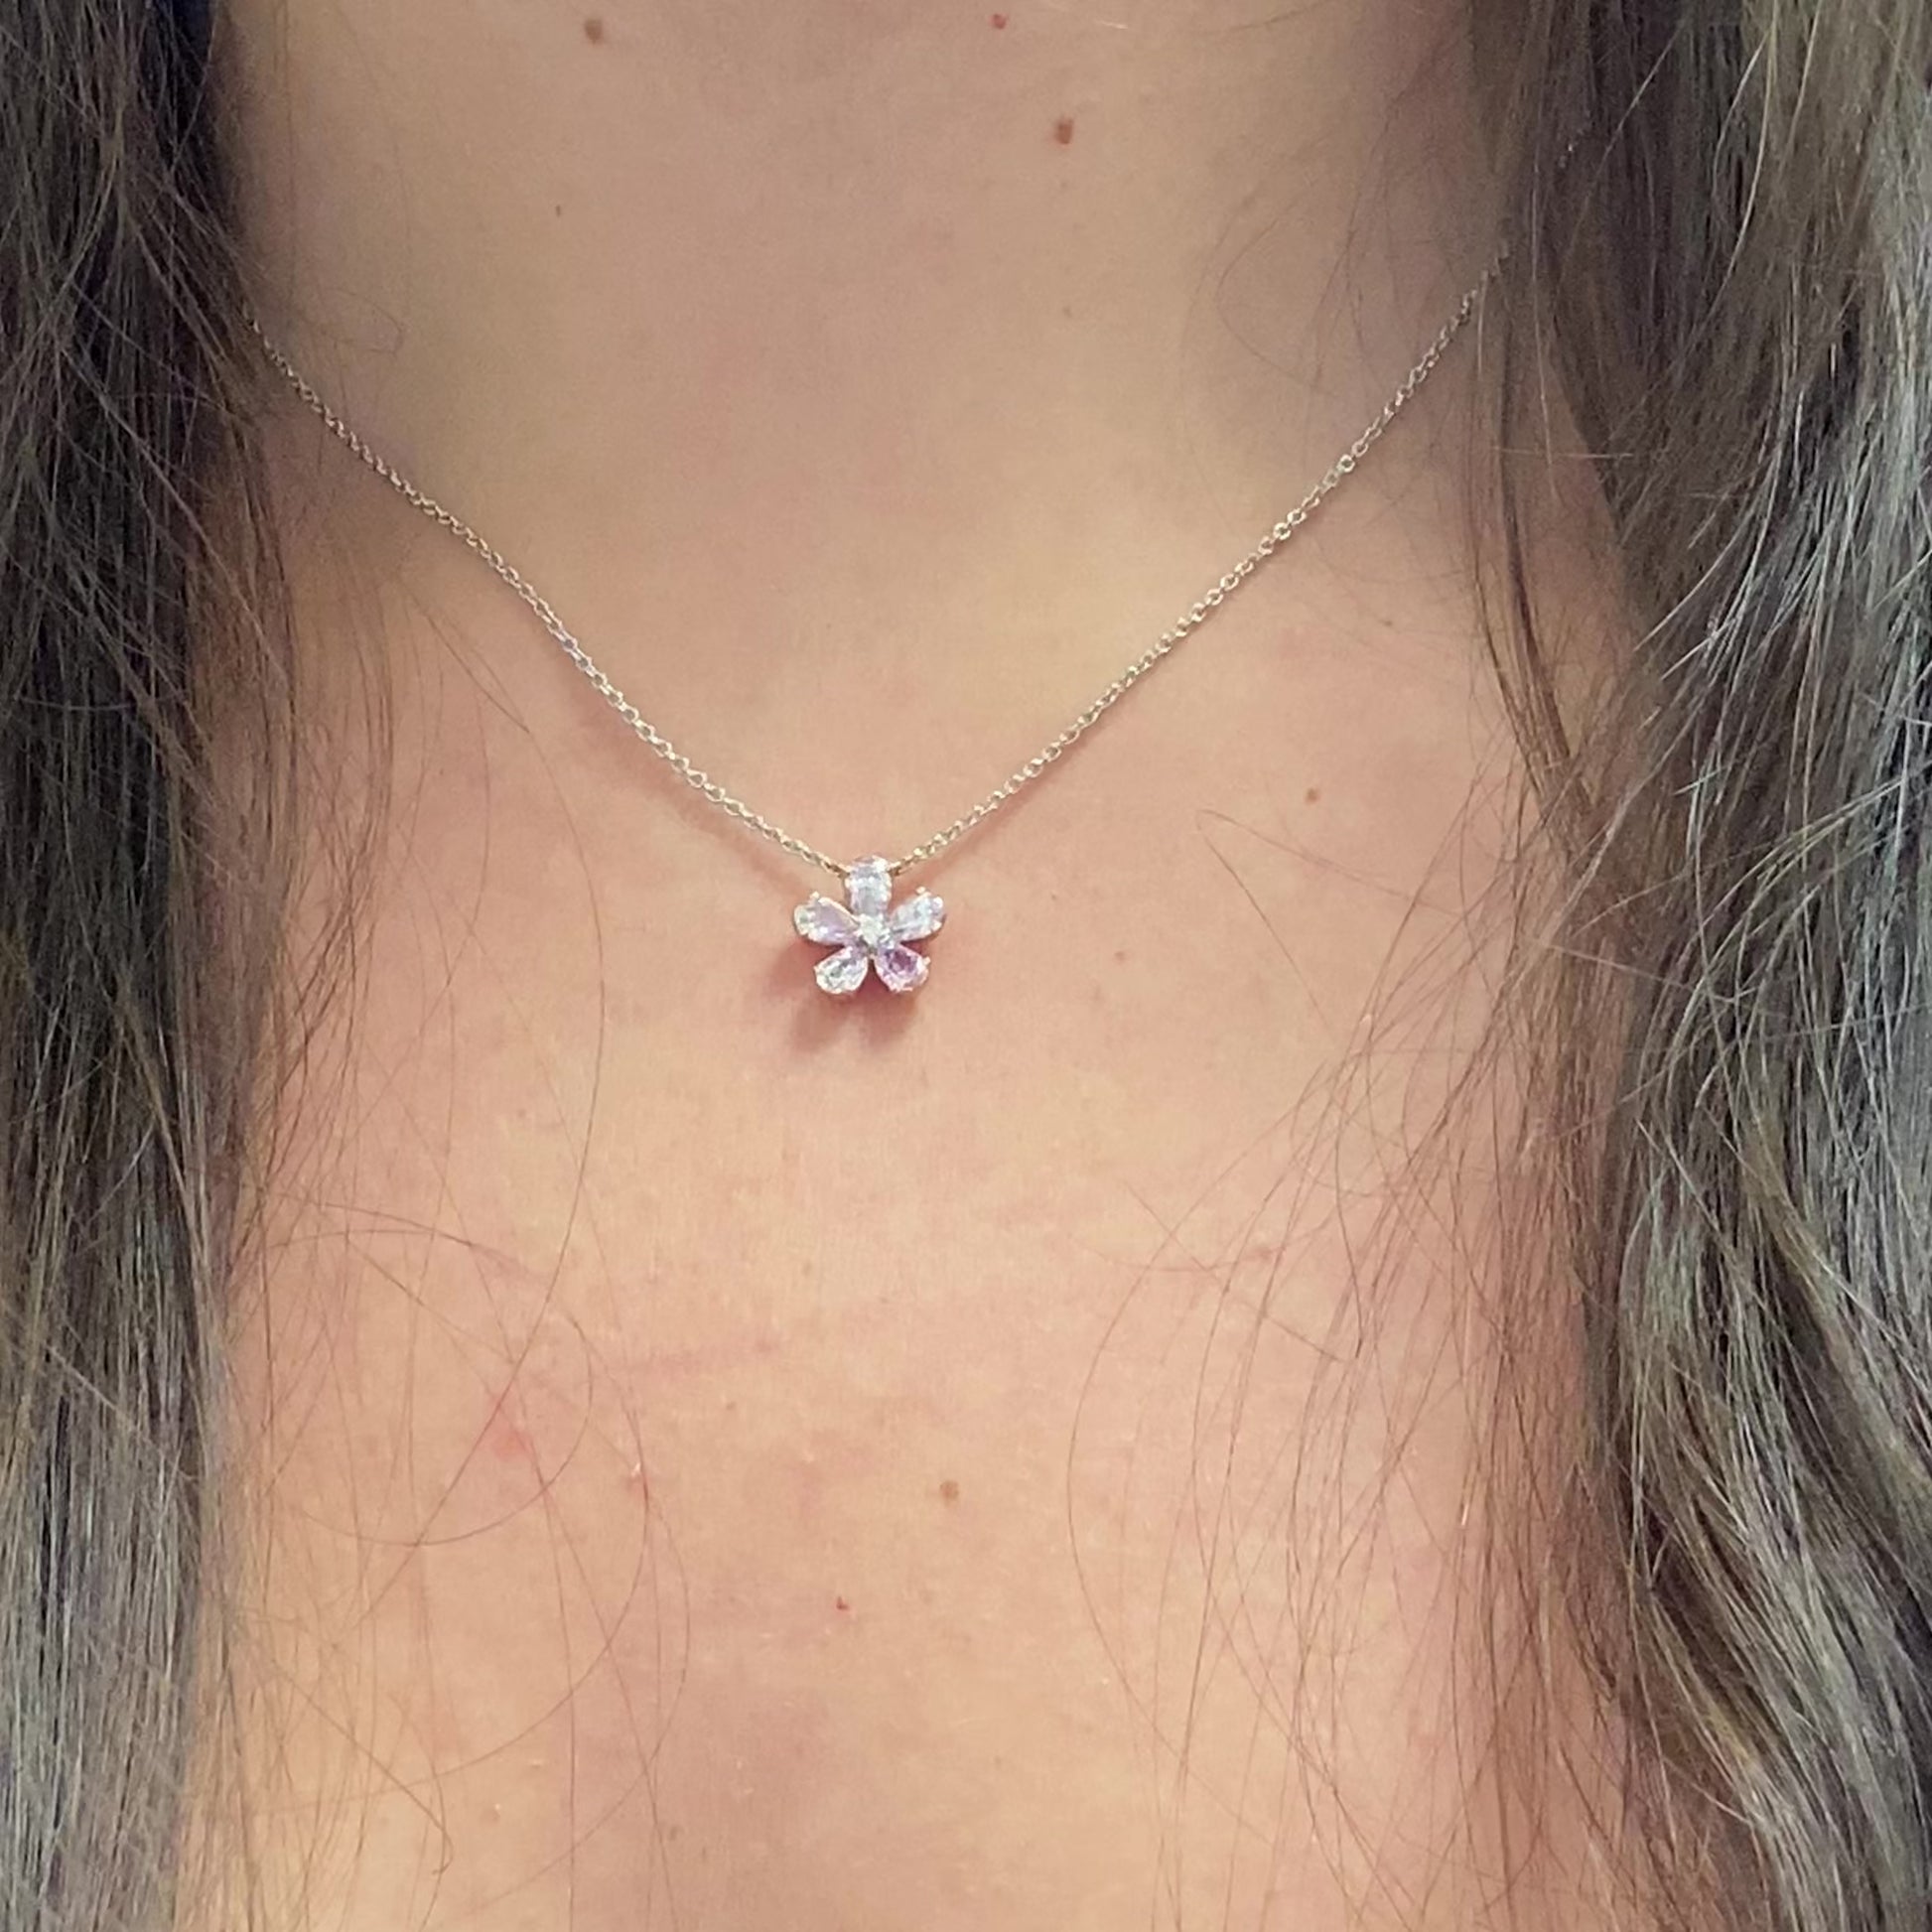 natural pink diamond jewelry, dainty jewelry for lovers of pink diamonds, pink diamond necklace